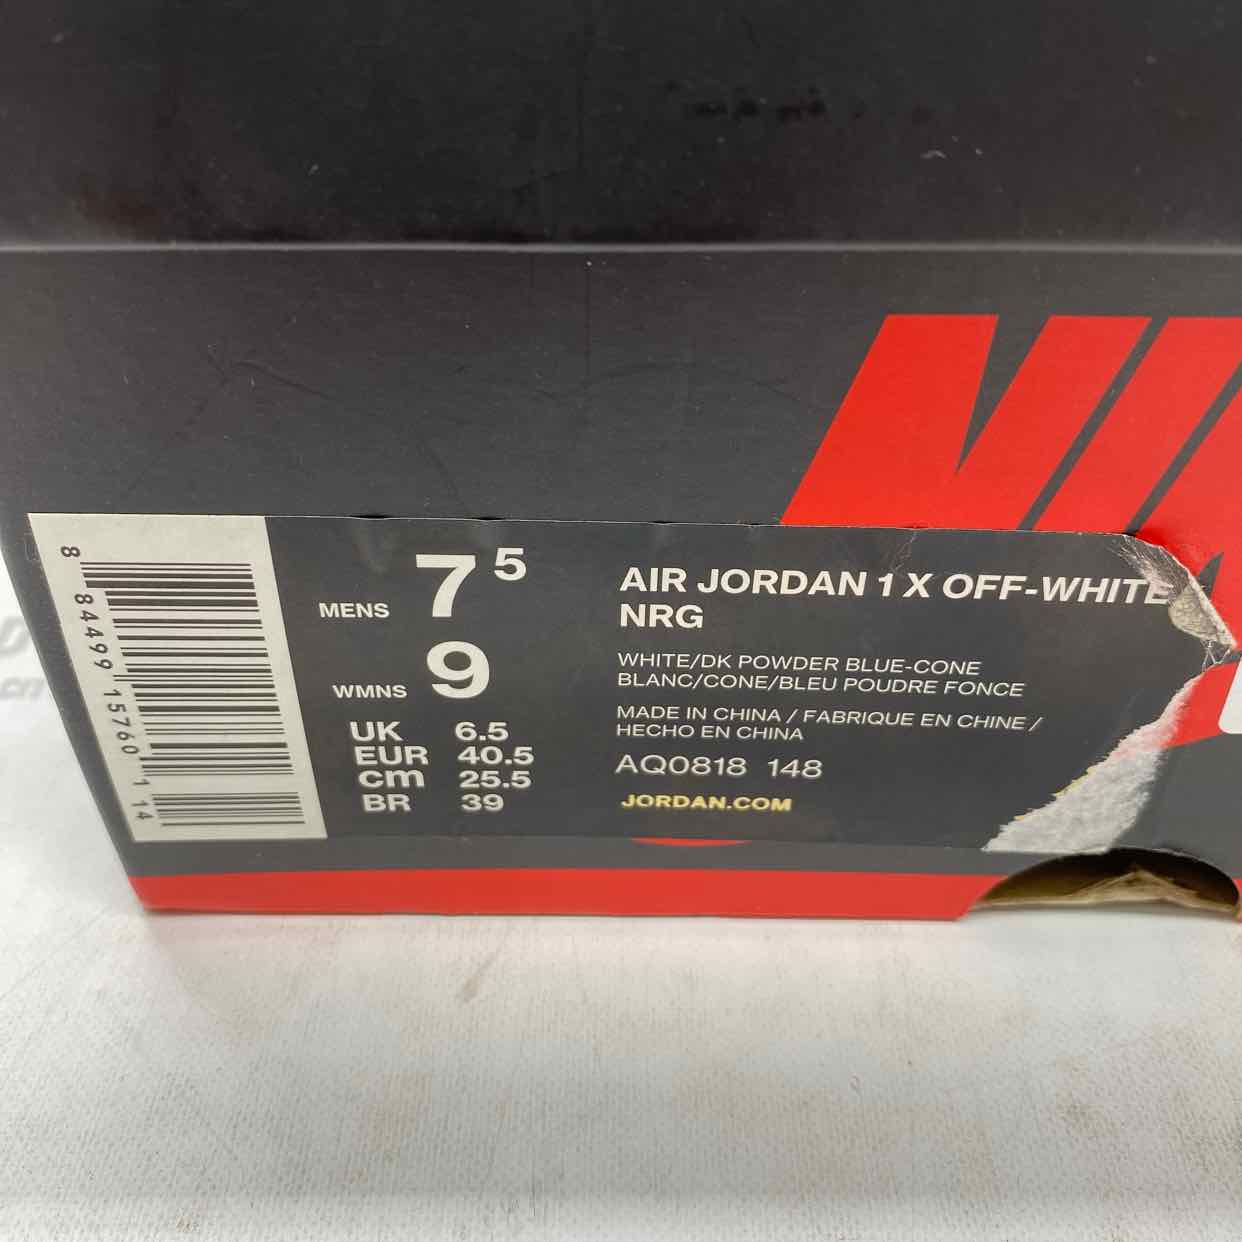 Air Jordan 1 Retro High OG "Off White Unc" 2018 New (Cond) Size 7.5